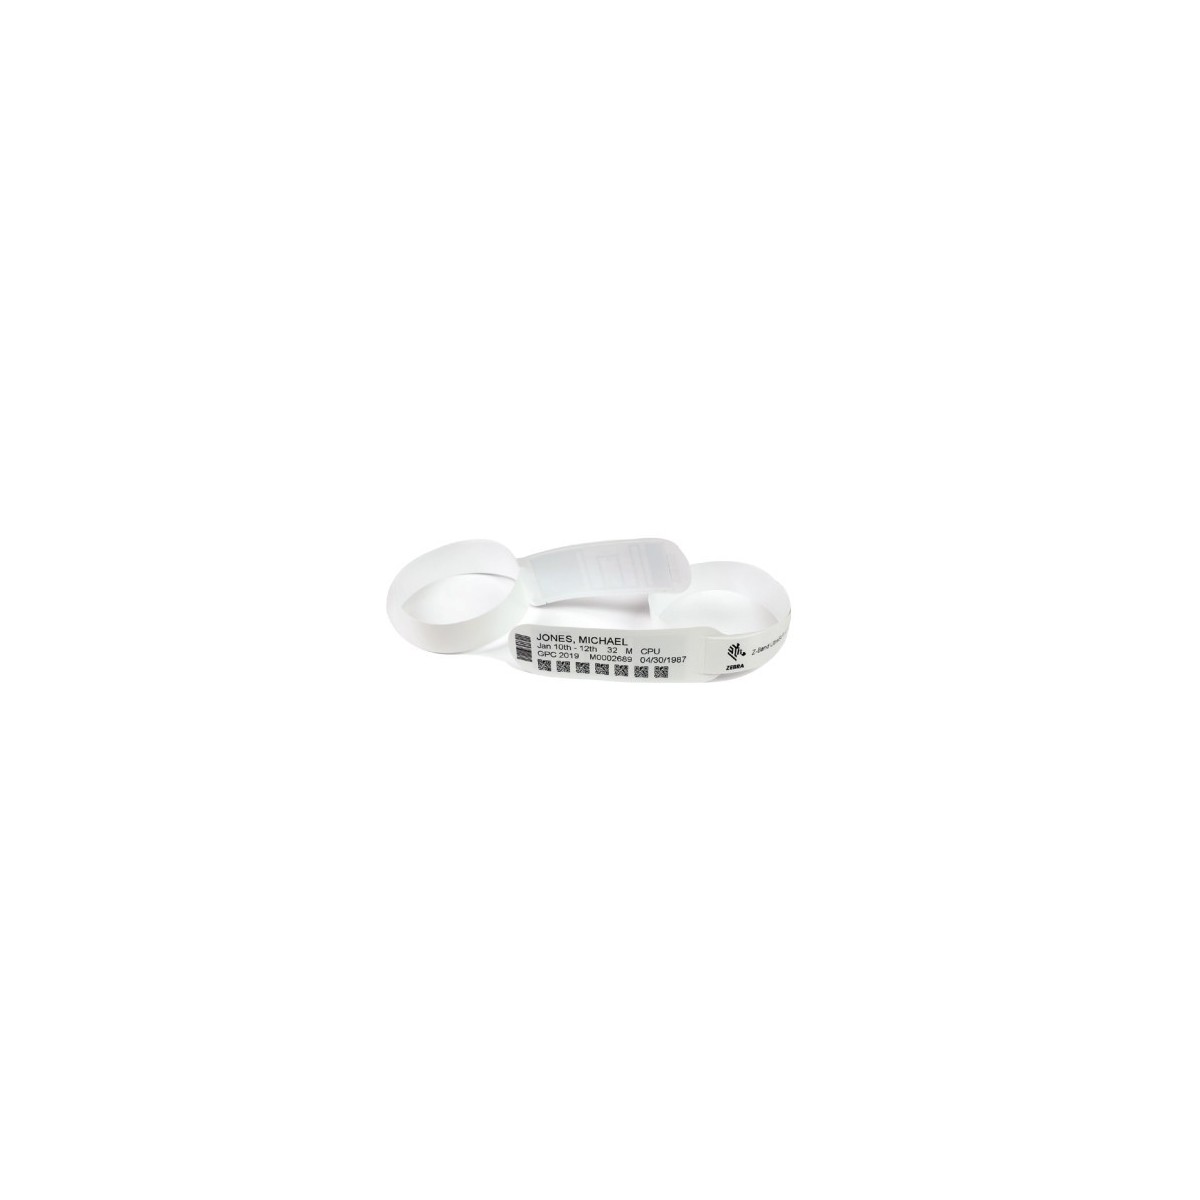 Zebra ZIPRD3015155 - Hospital wristband - White - Monotone